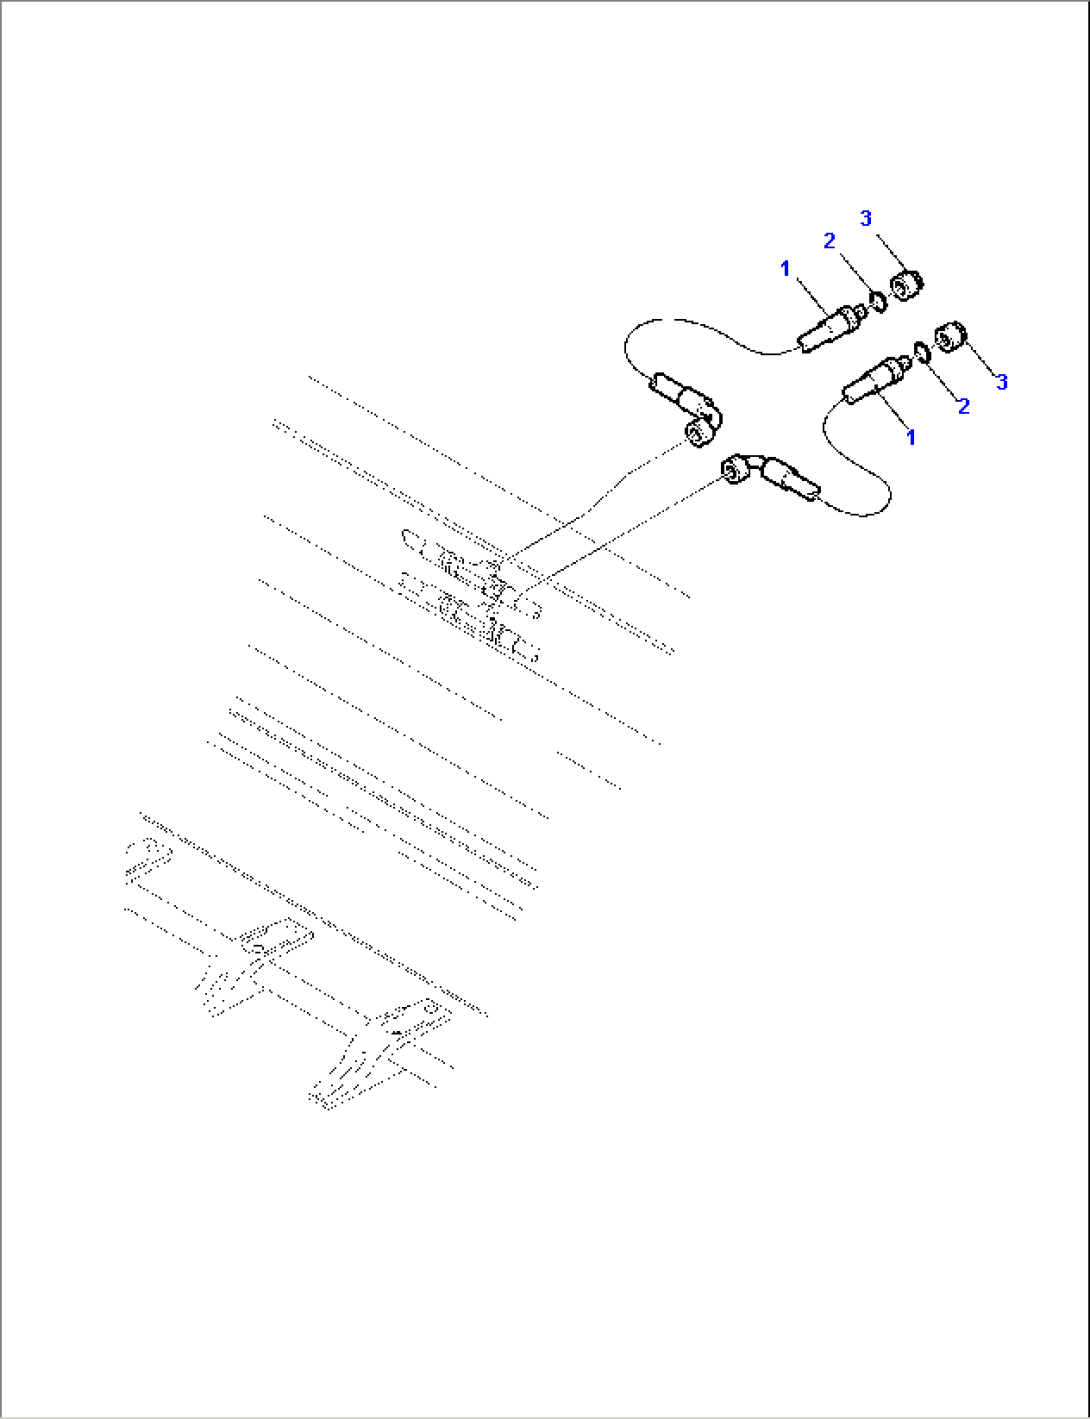 HYDRAULIC PIPING (BUCKET 4 IN 1 LINE) (3/3)